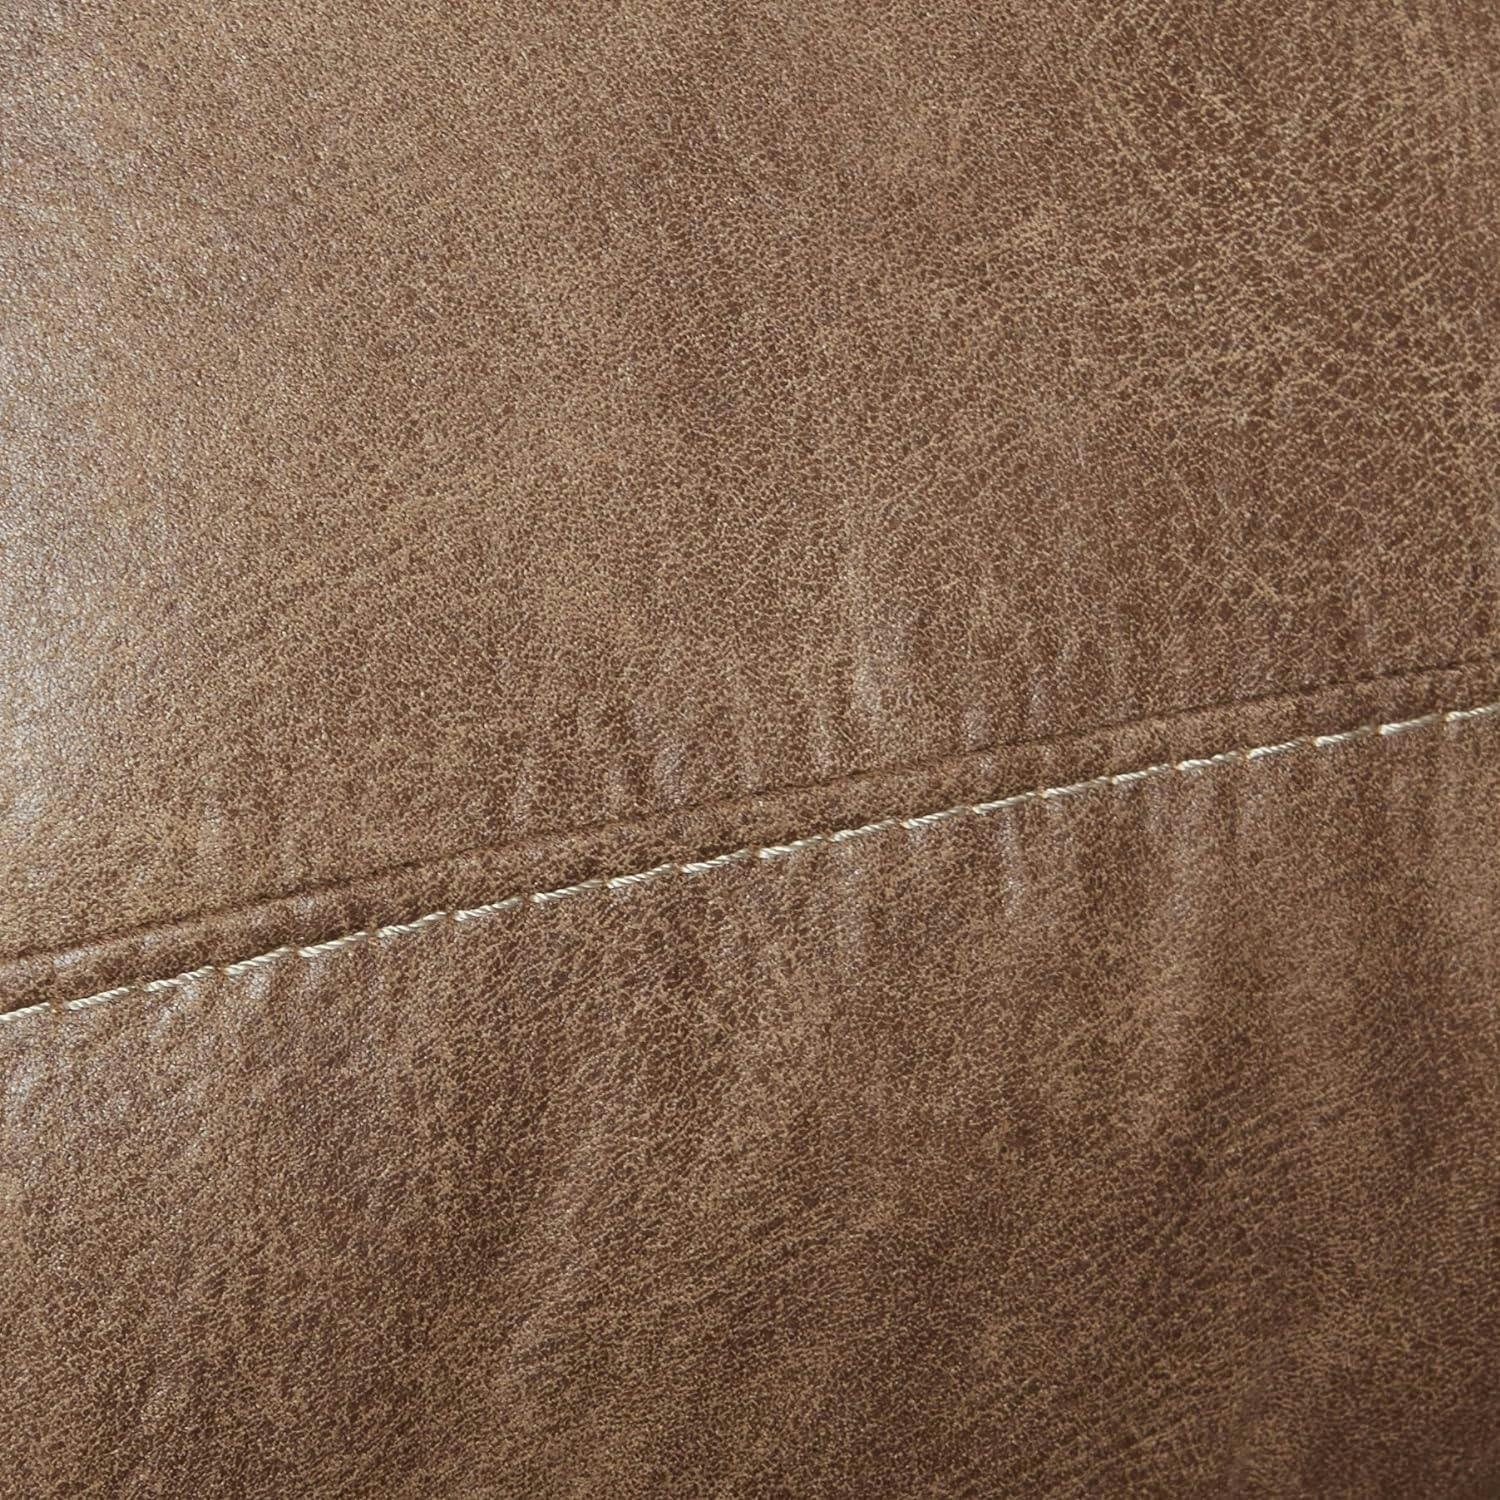 Larkinhurst Earth Brown Faux Leather Traditional Rocker Recliner